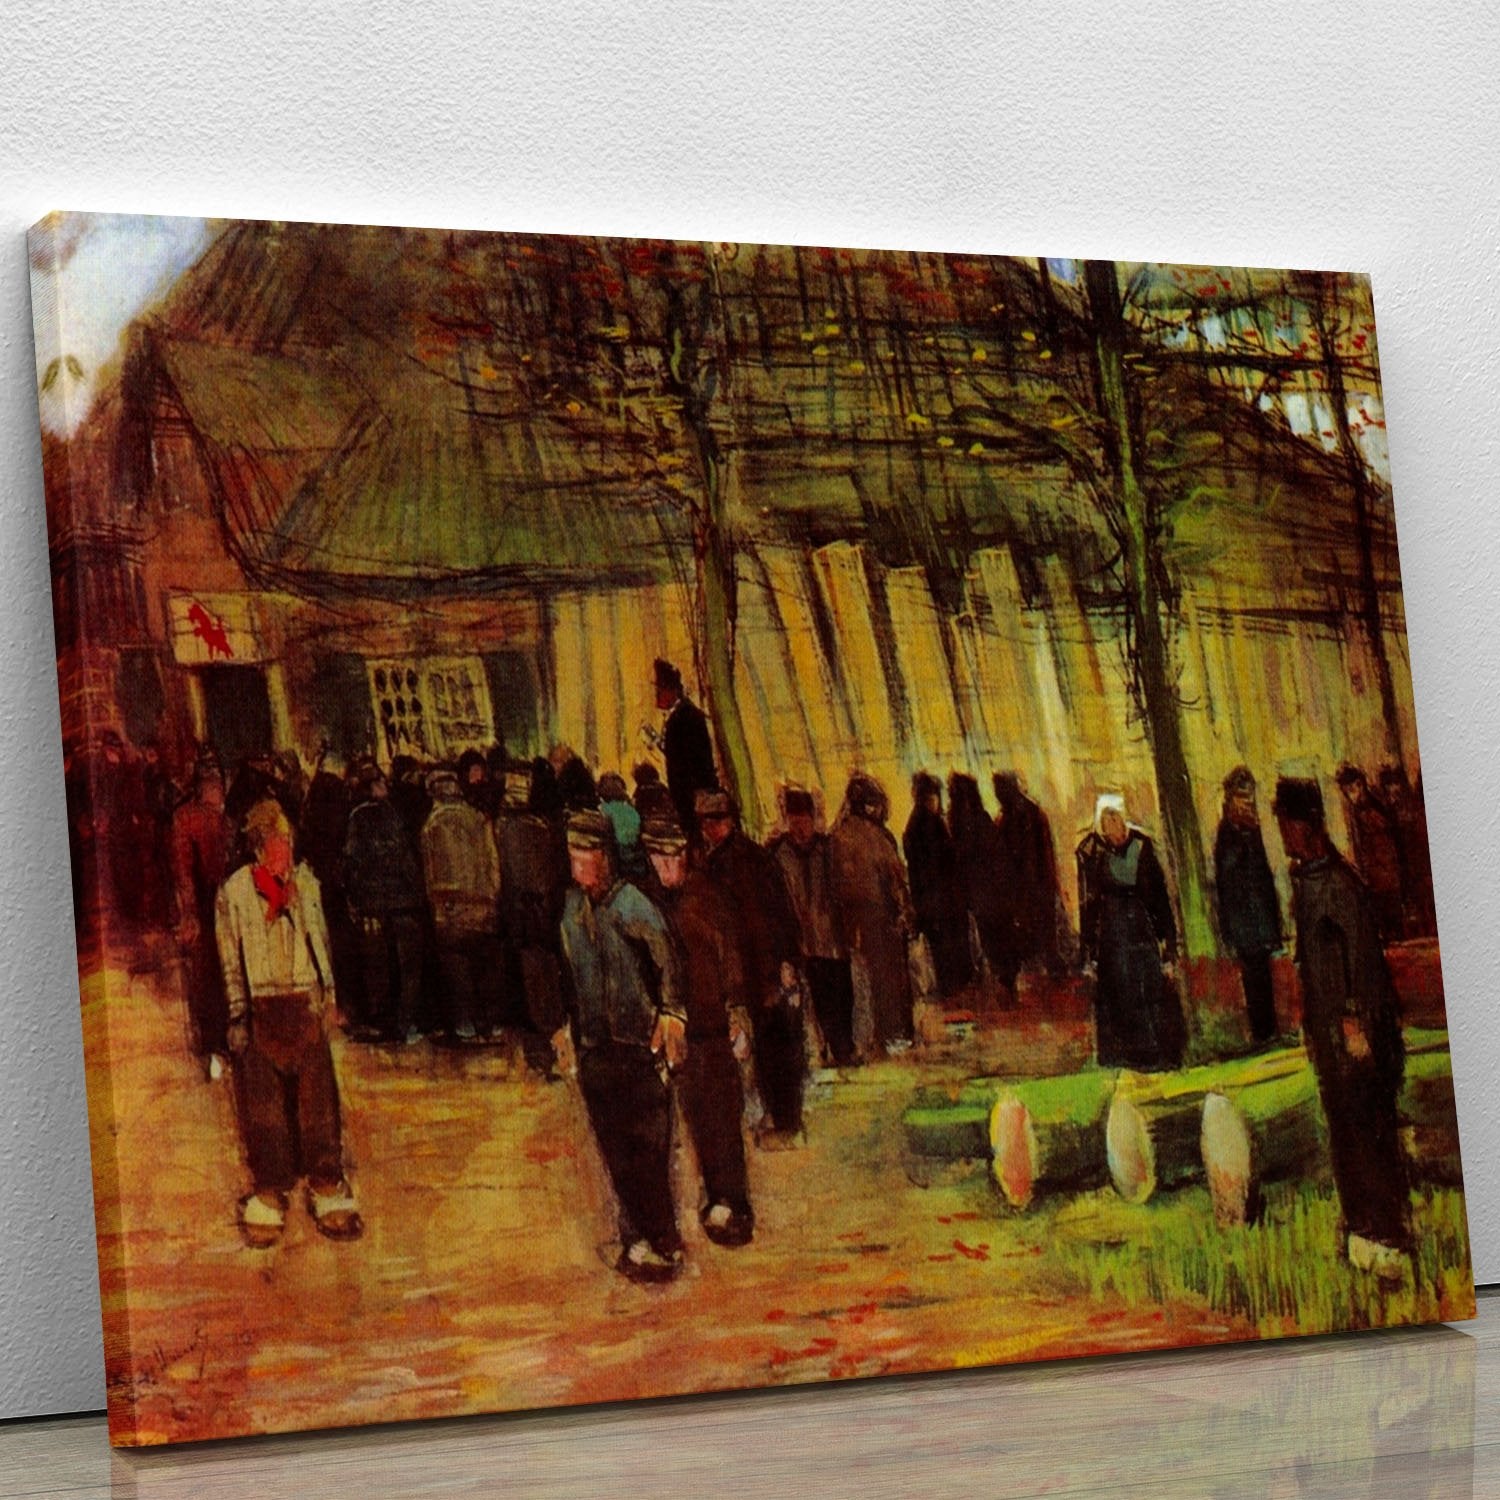 Lumber Sale by Van Gogh Canvas Print or Poster